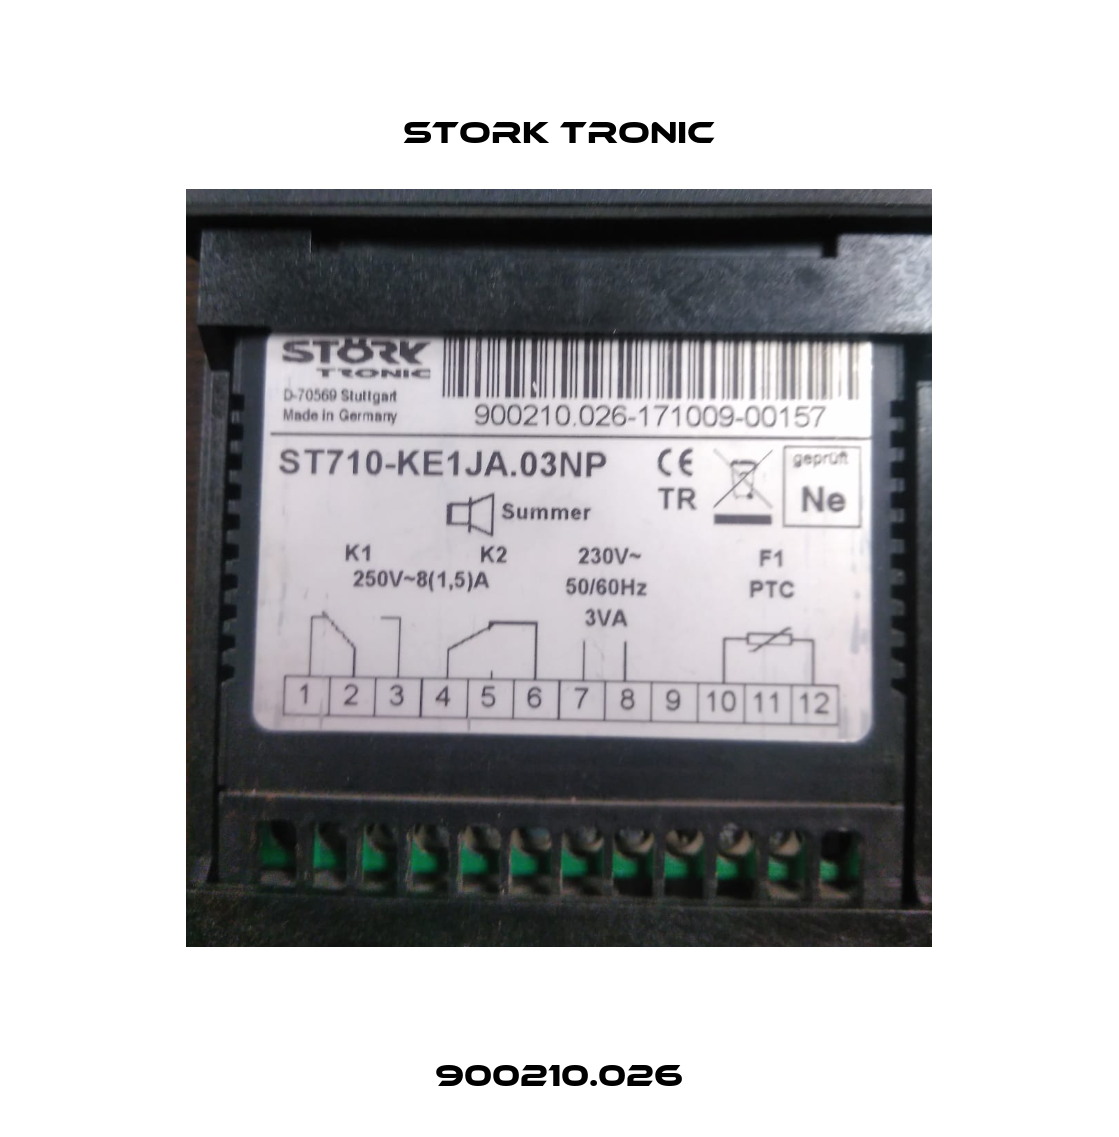 900210.026 Stork tronic